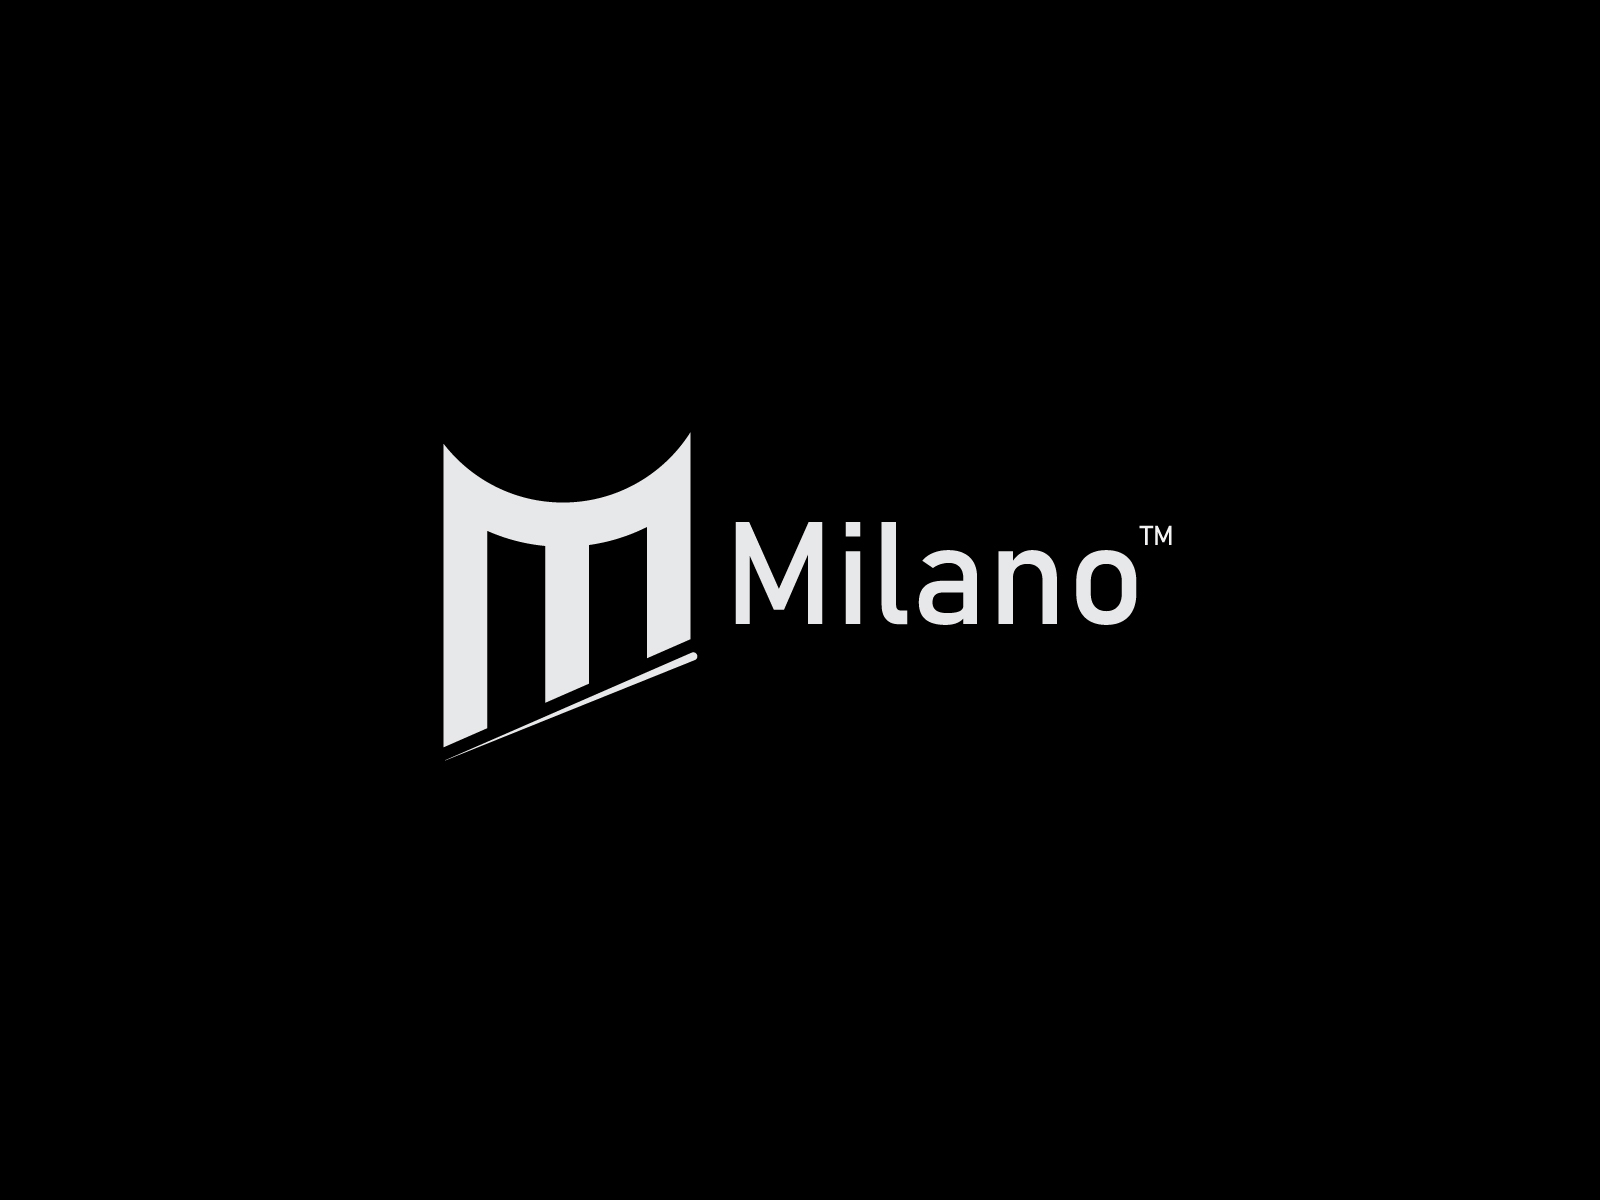 Milano logo by Surjo Arts on Dribbble